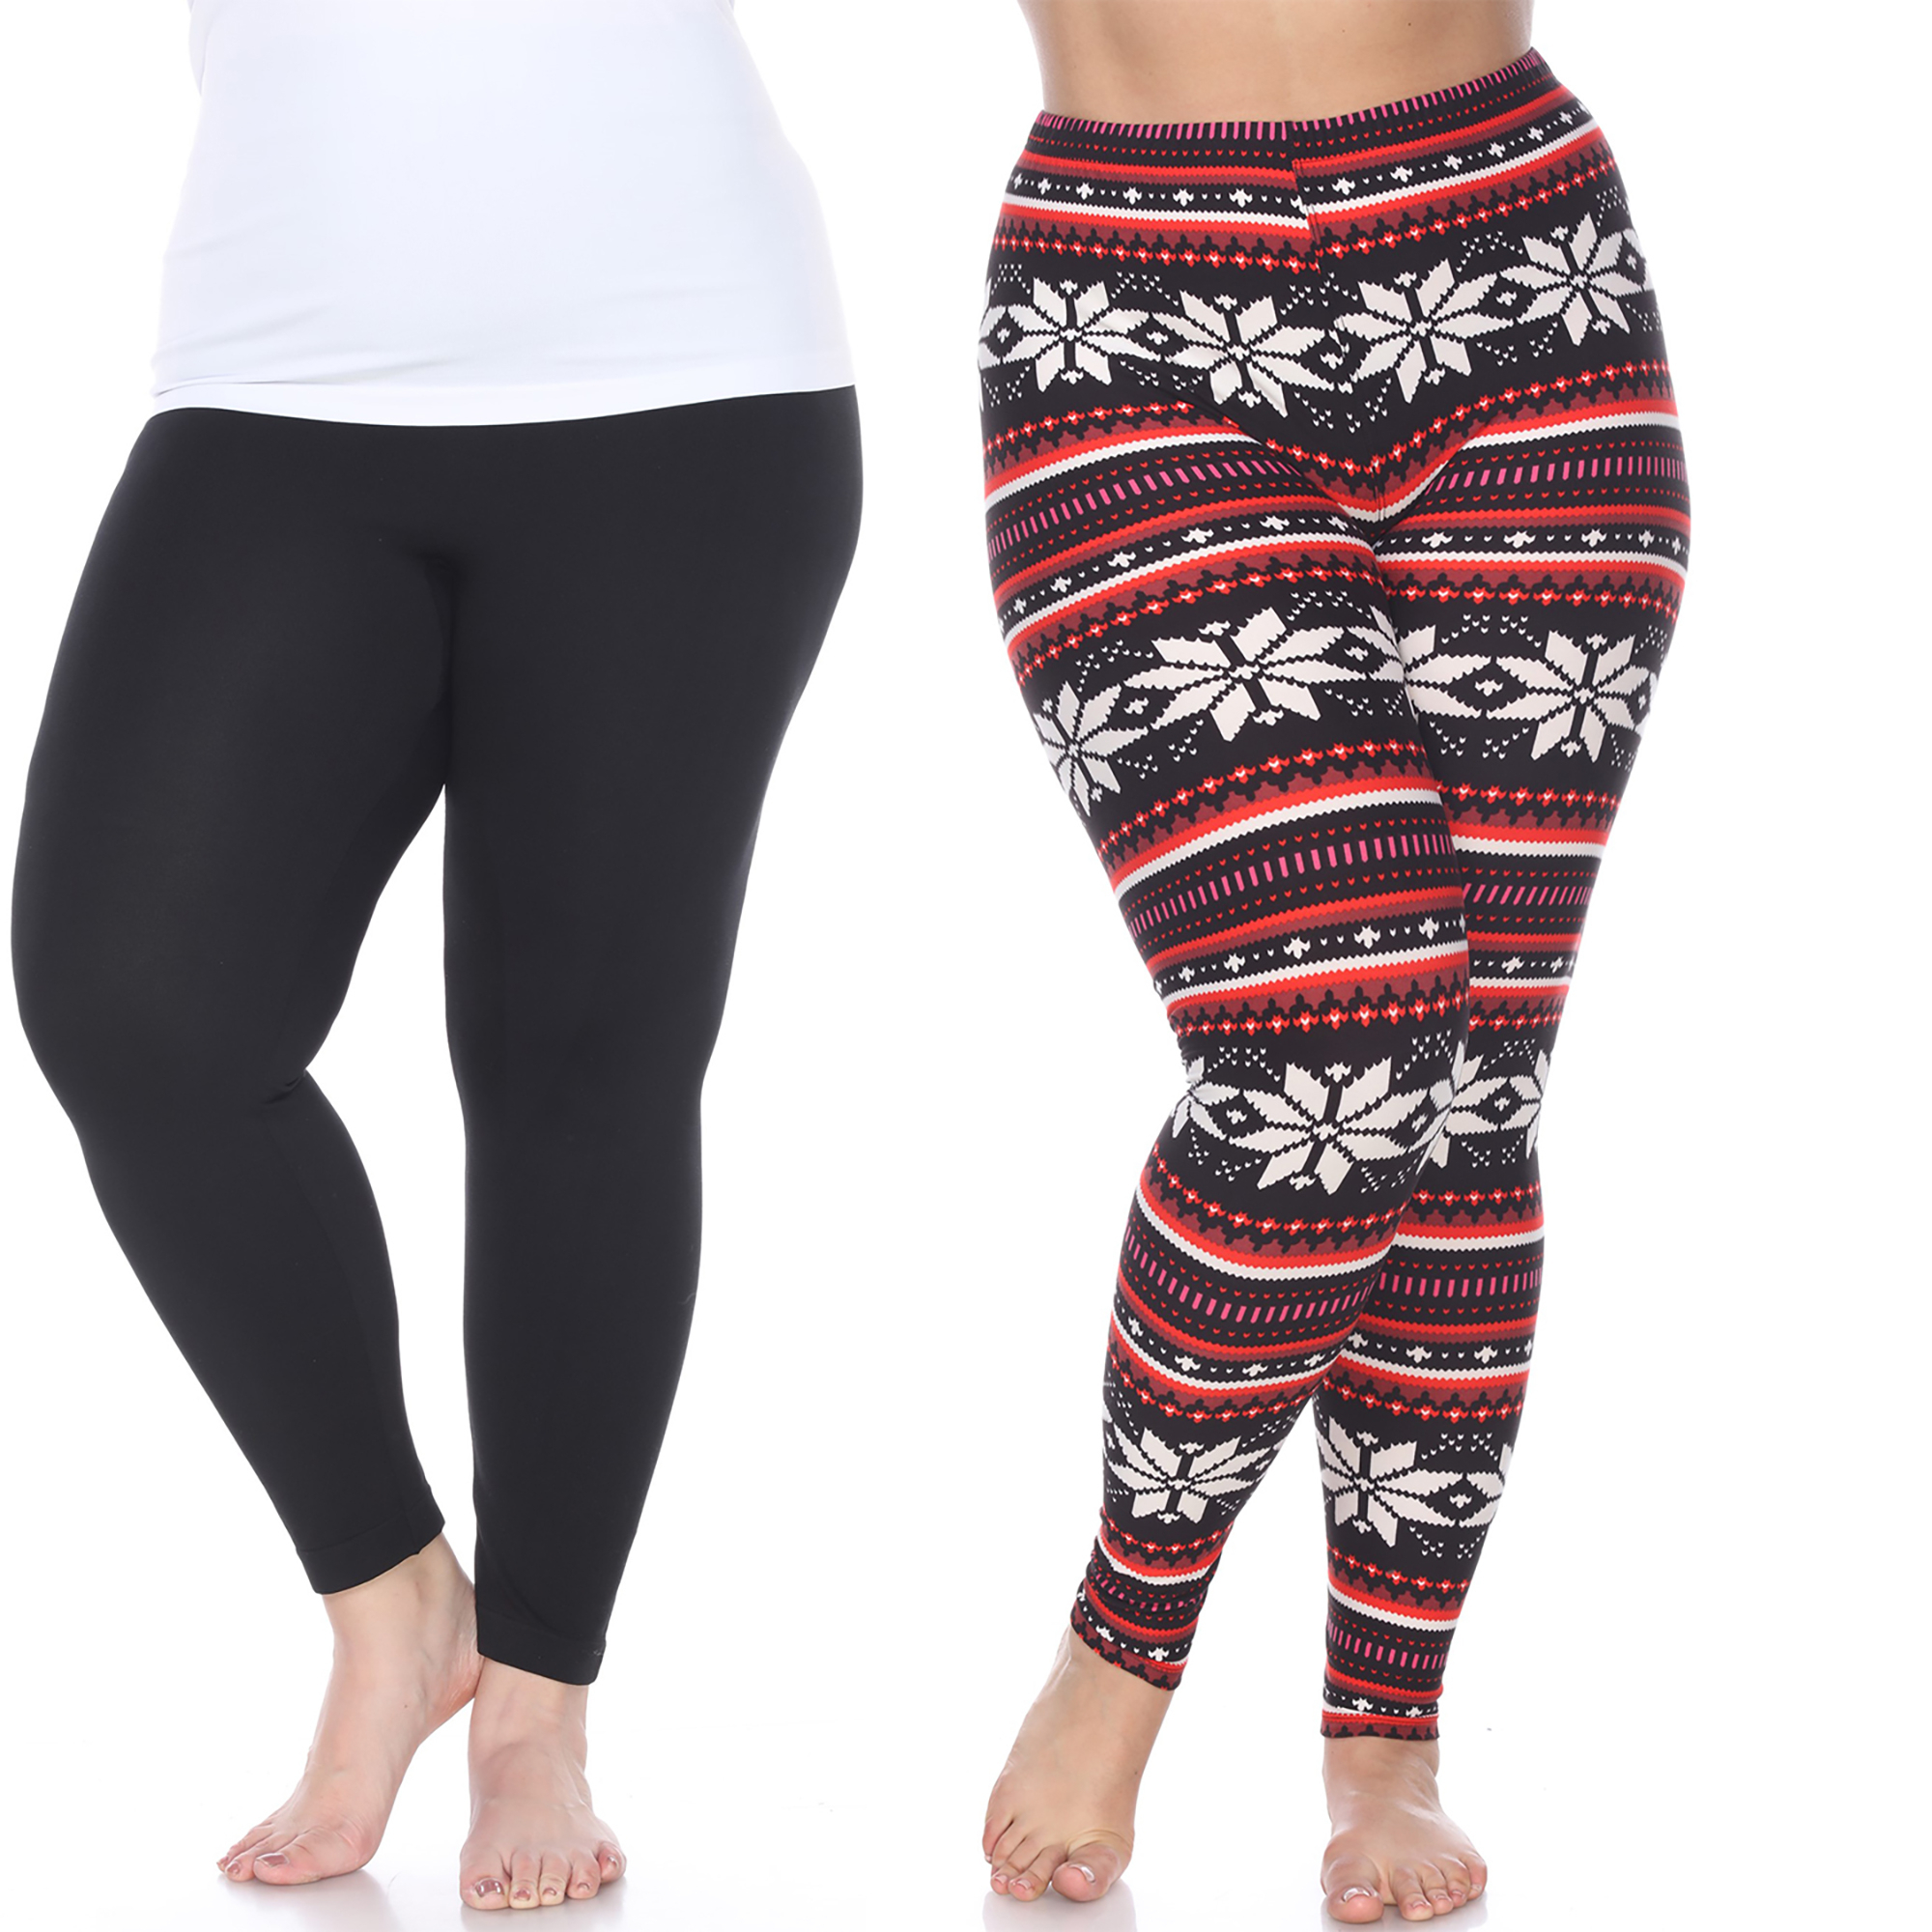 White Mark Women's Pack Of 2 Holiday Leggings - Black, Black/Red/Wht, One Size - Plus